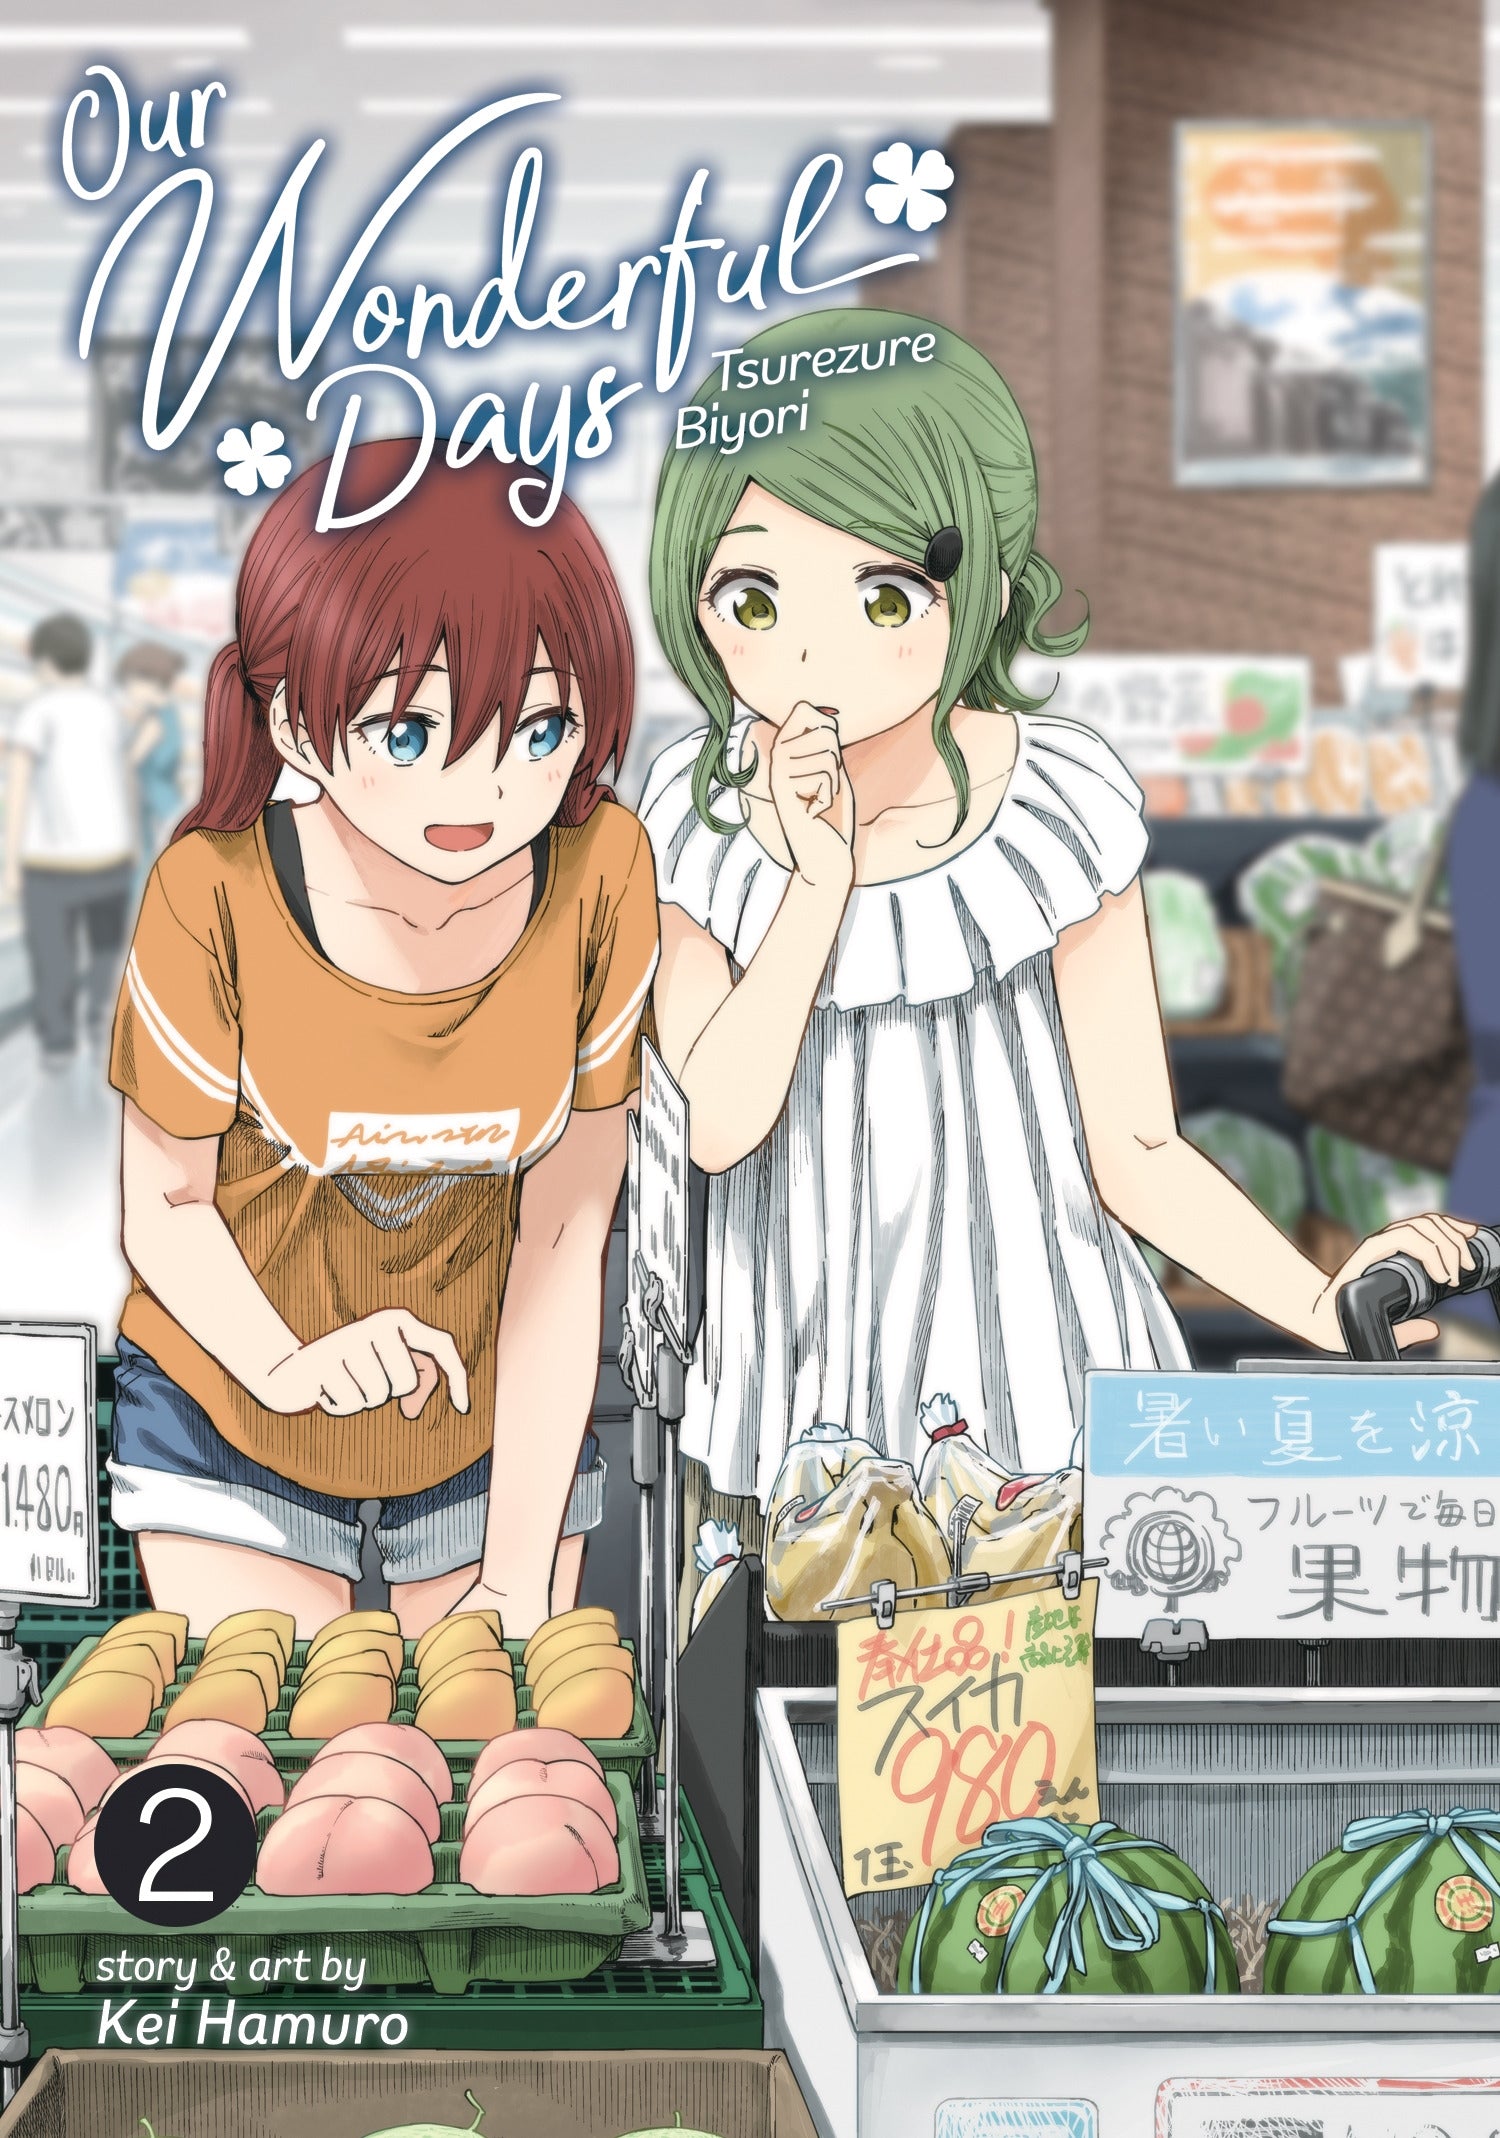 Our Wonderful Days Tsurezure Biyori Vol. 2 - Manga Warehouse